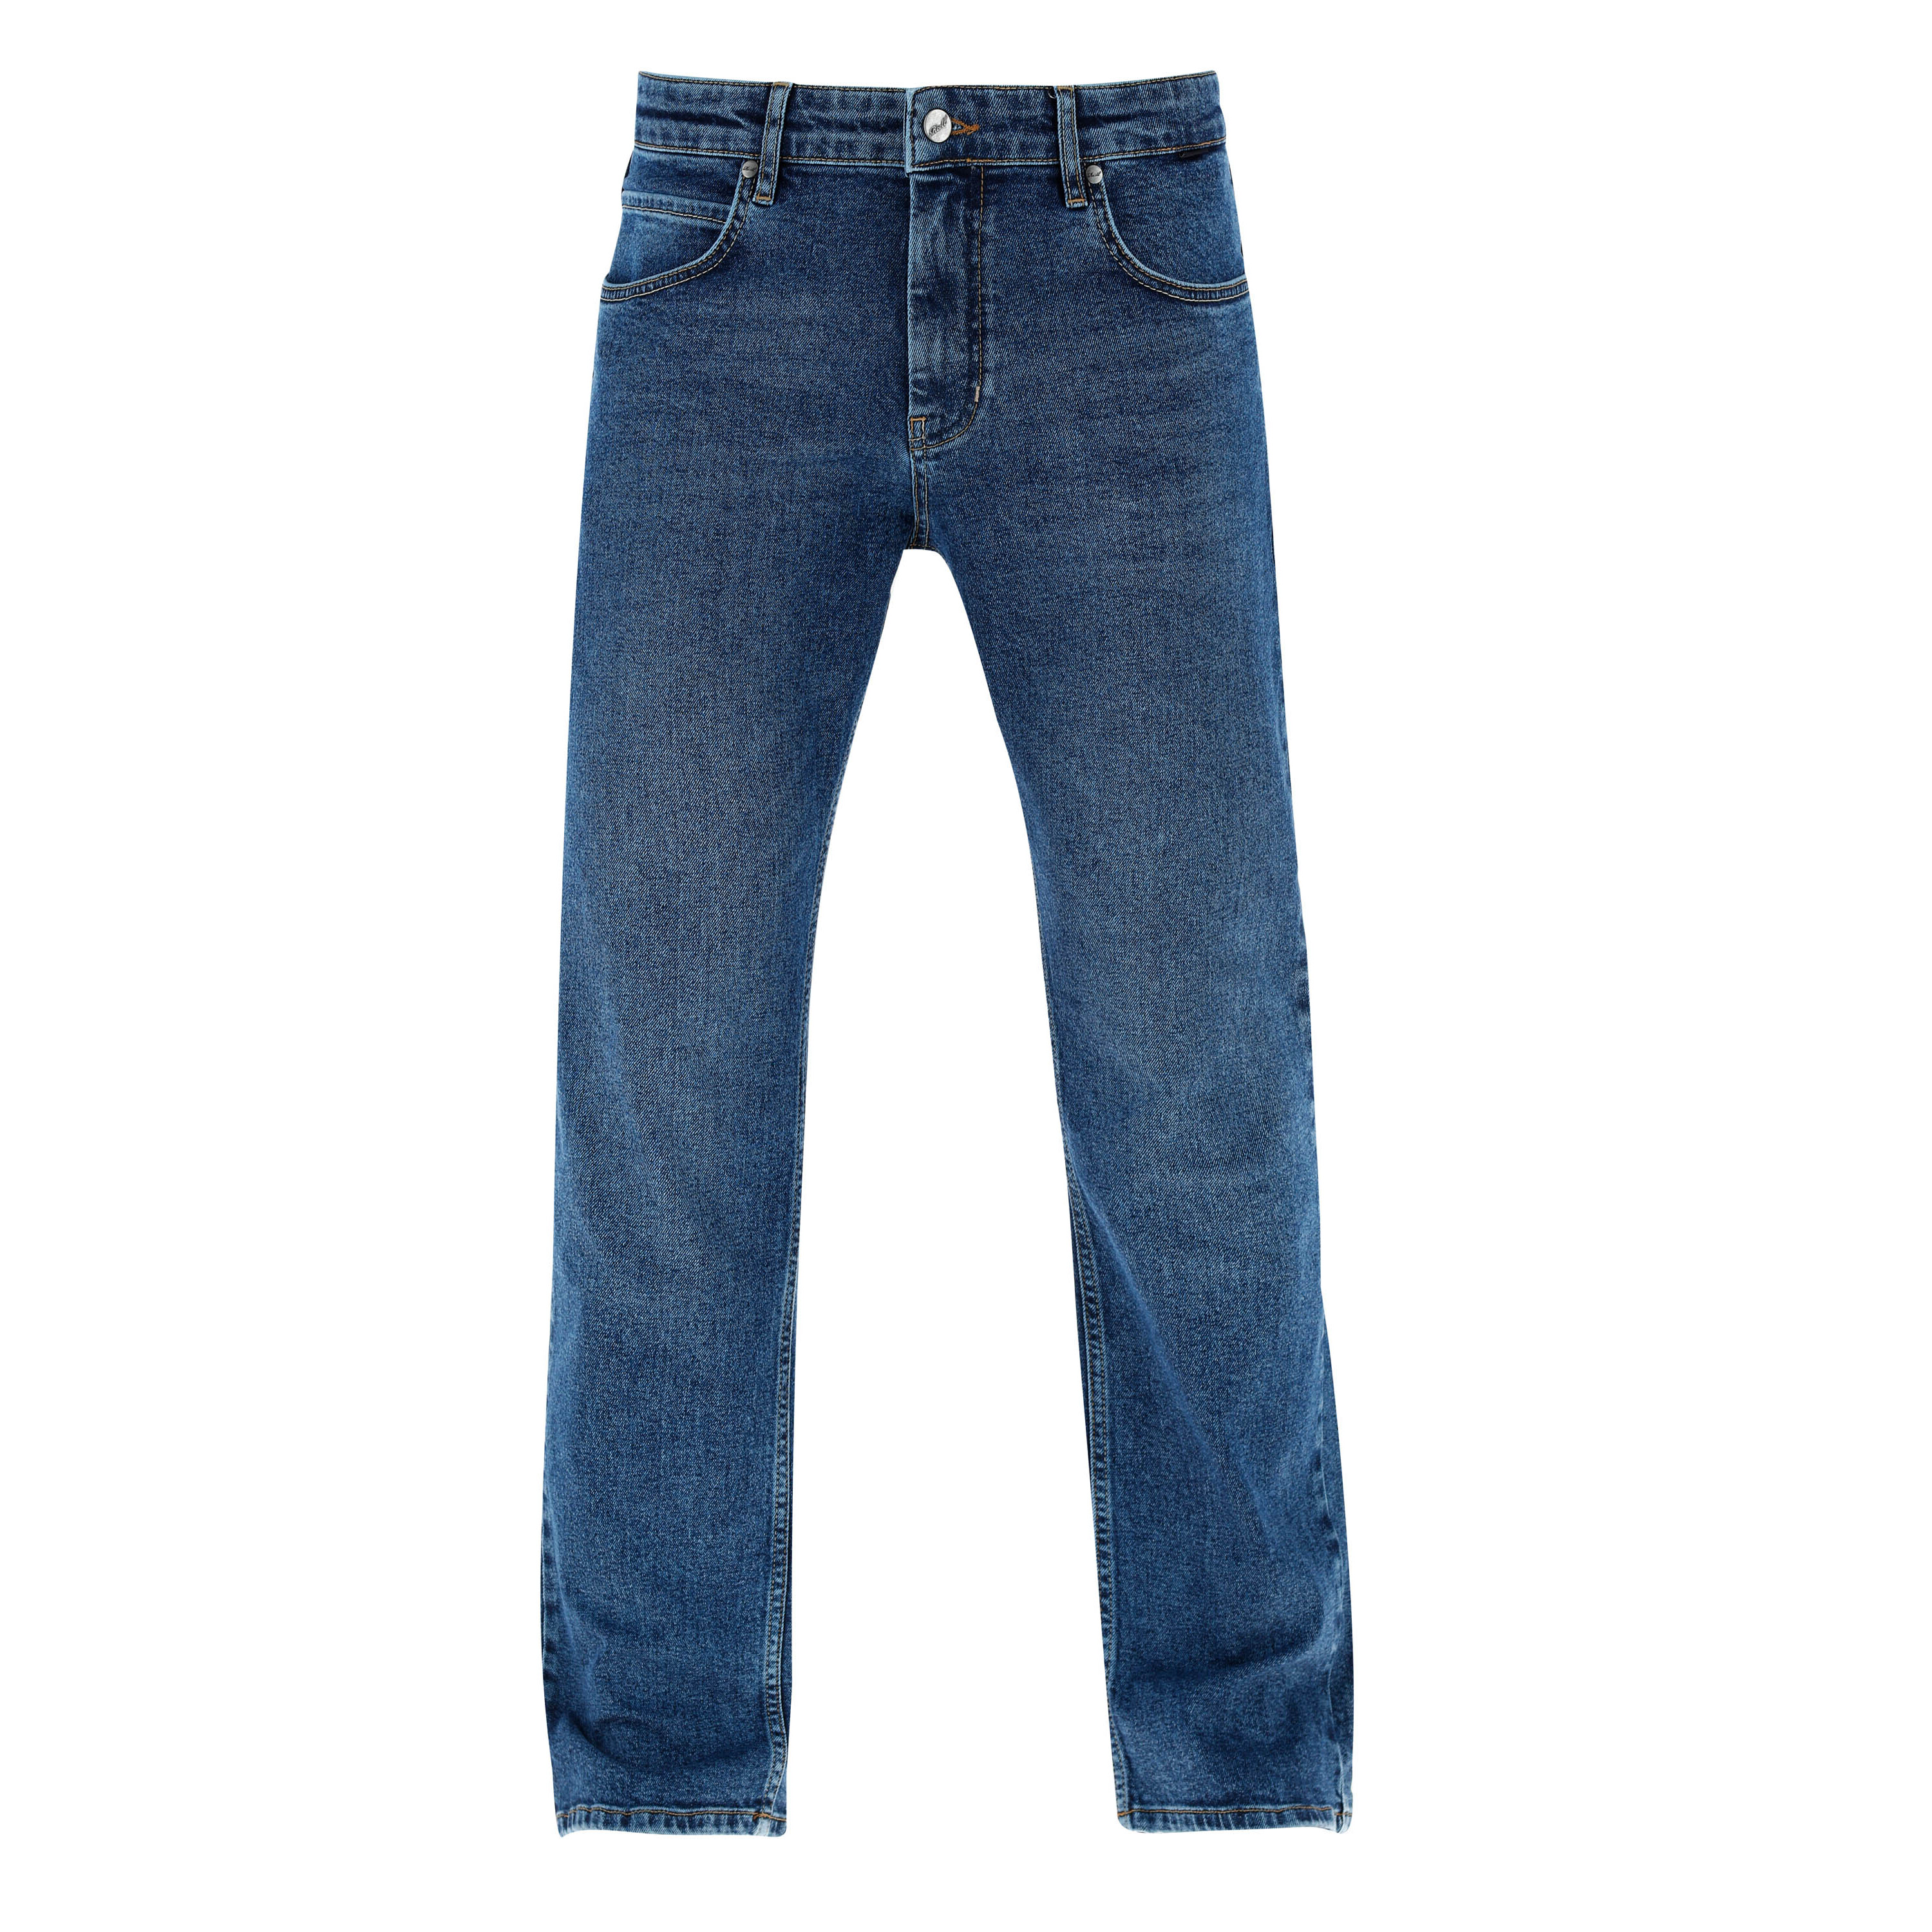 jeans reell lowfly 2